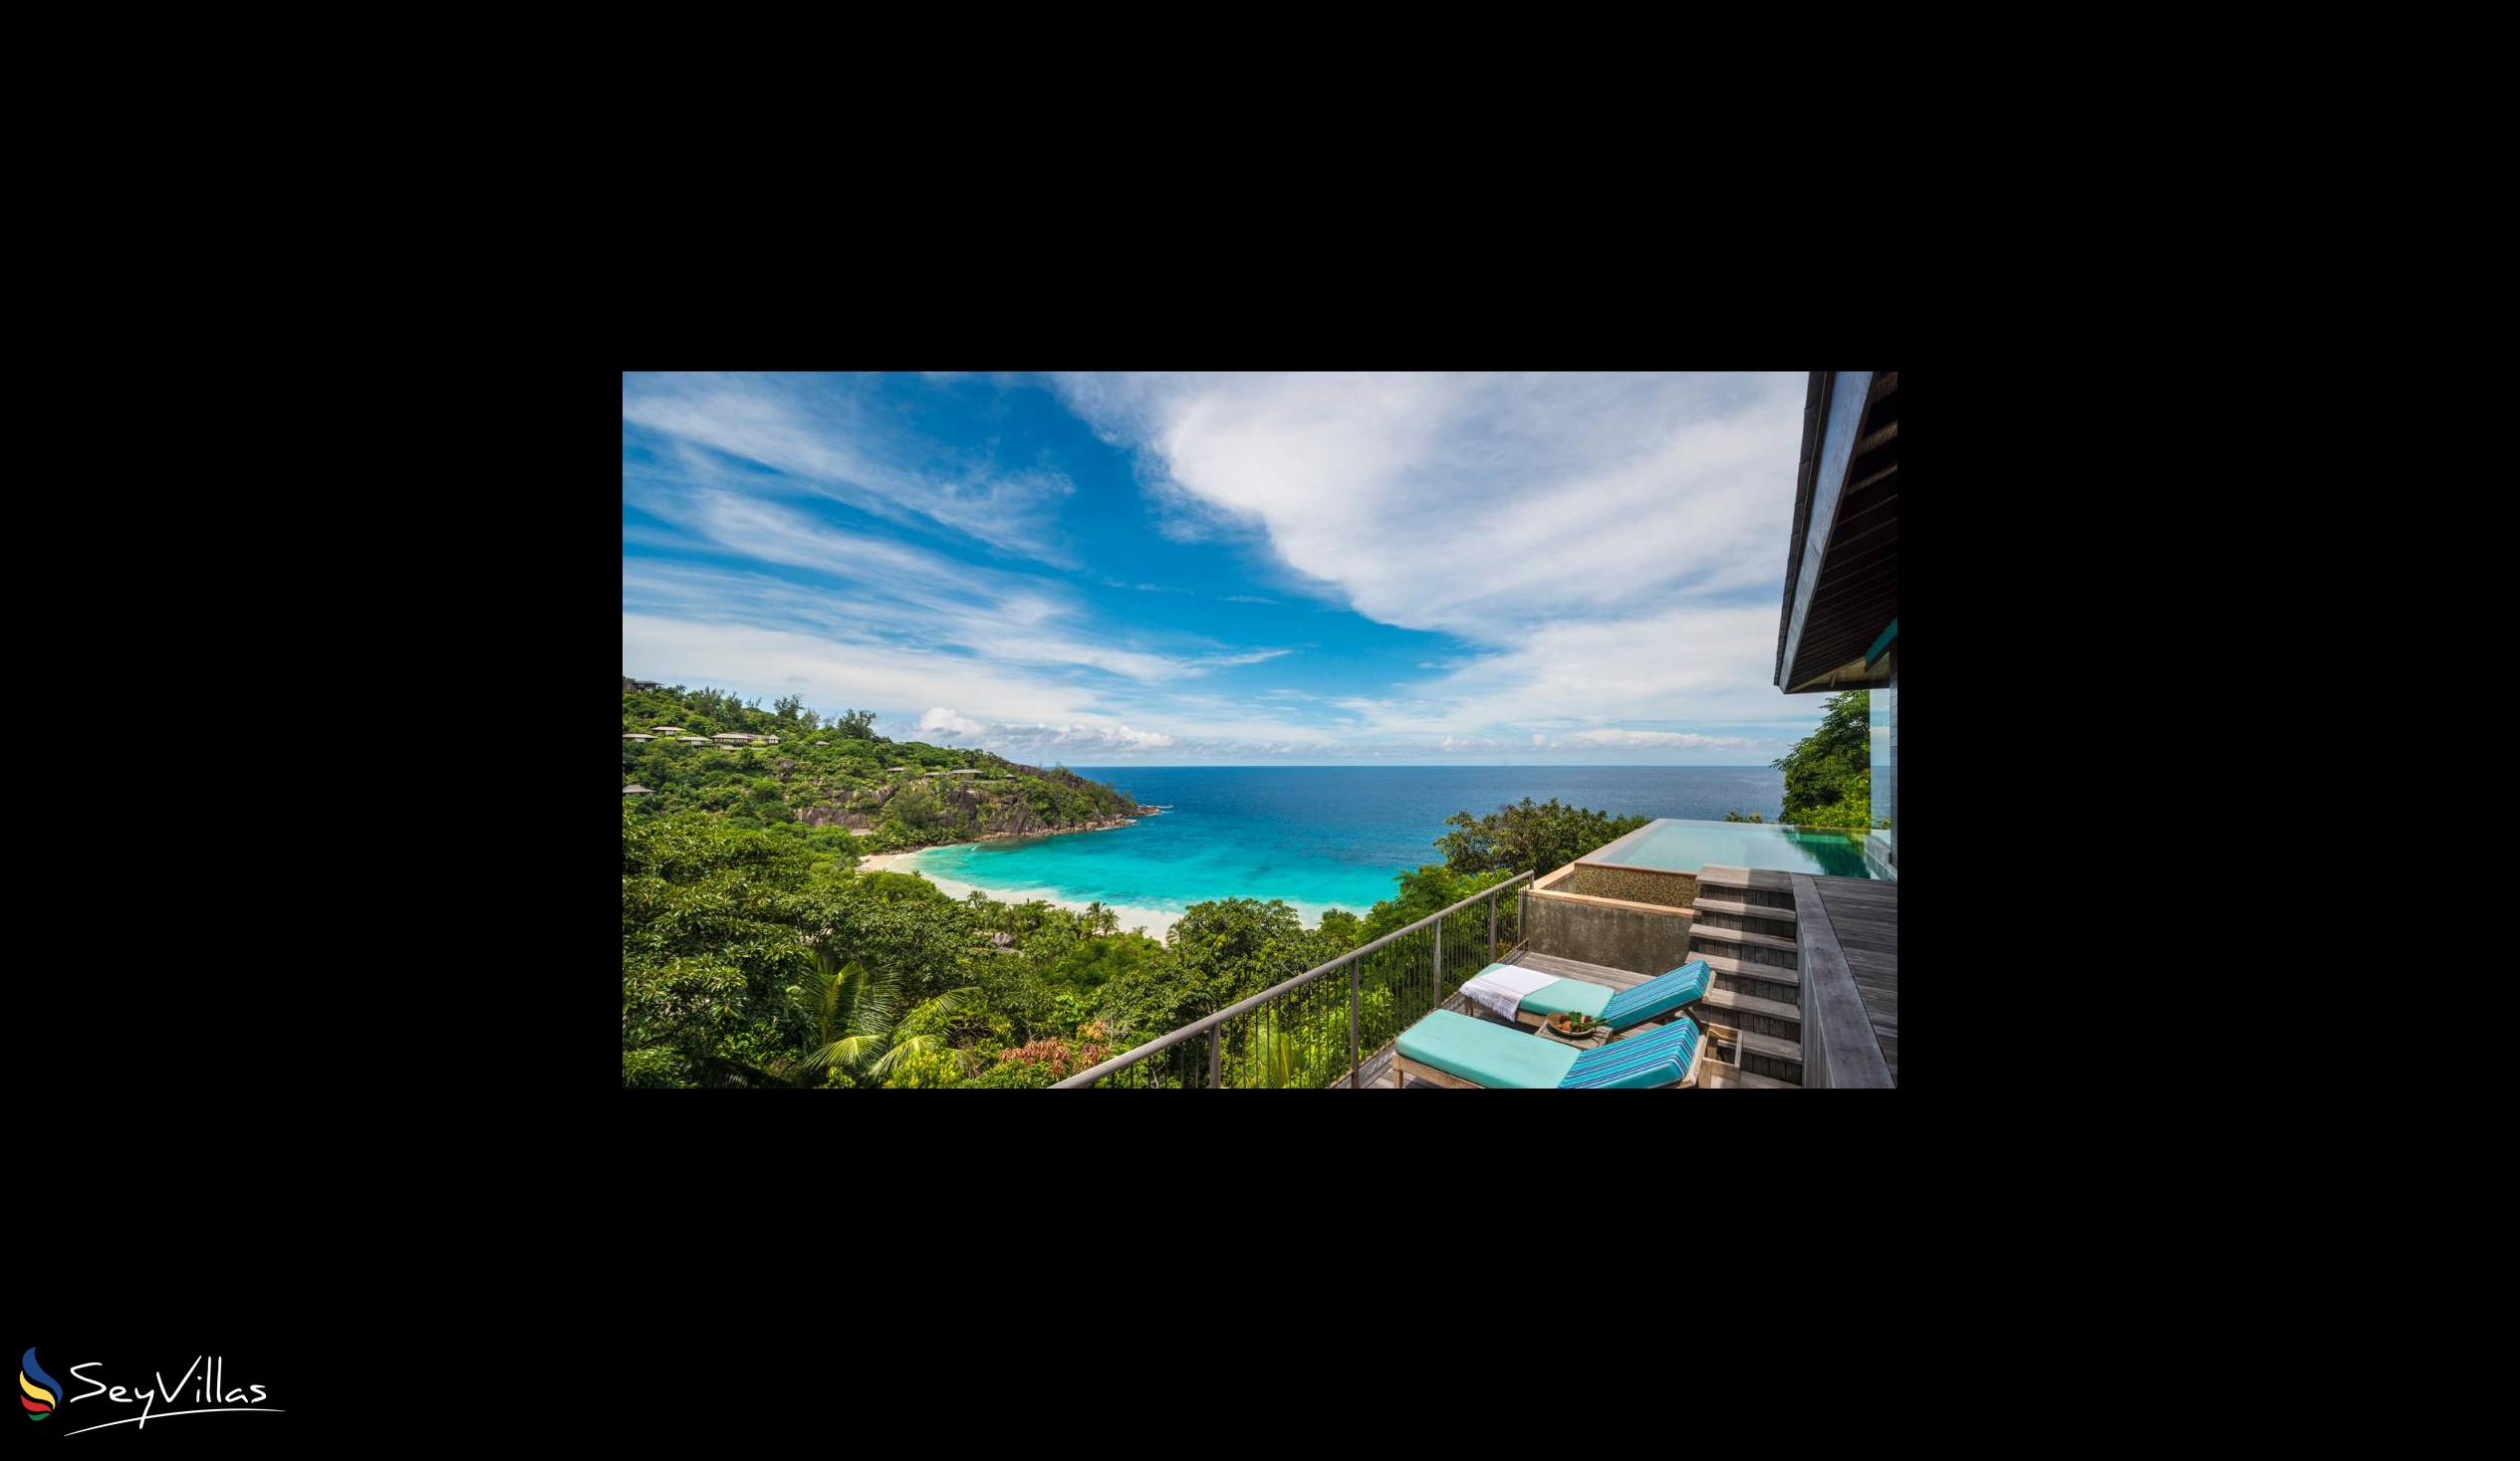 Photo 40: Four Seasons Resort - Hilltop Ocean View Villa - Mahé (Seychelles)